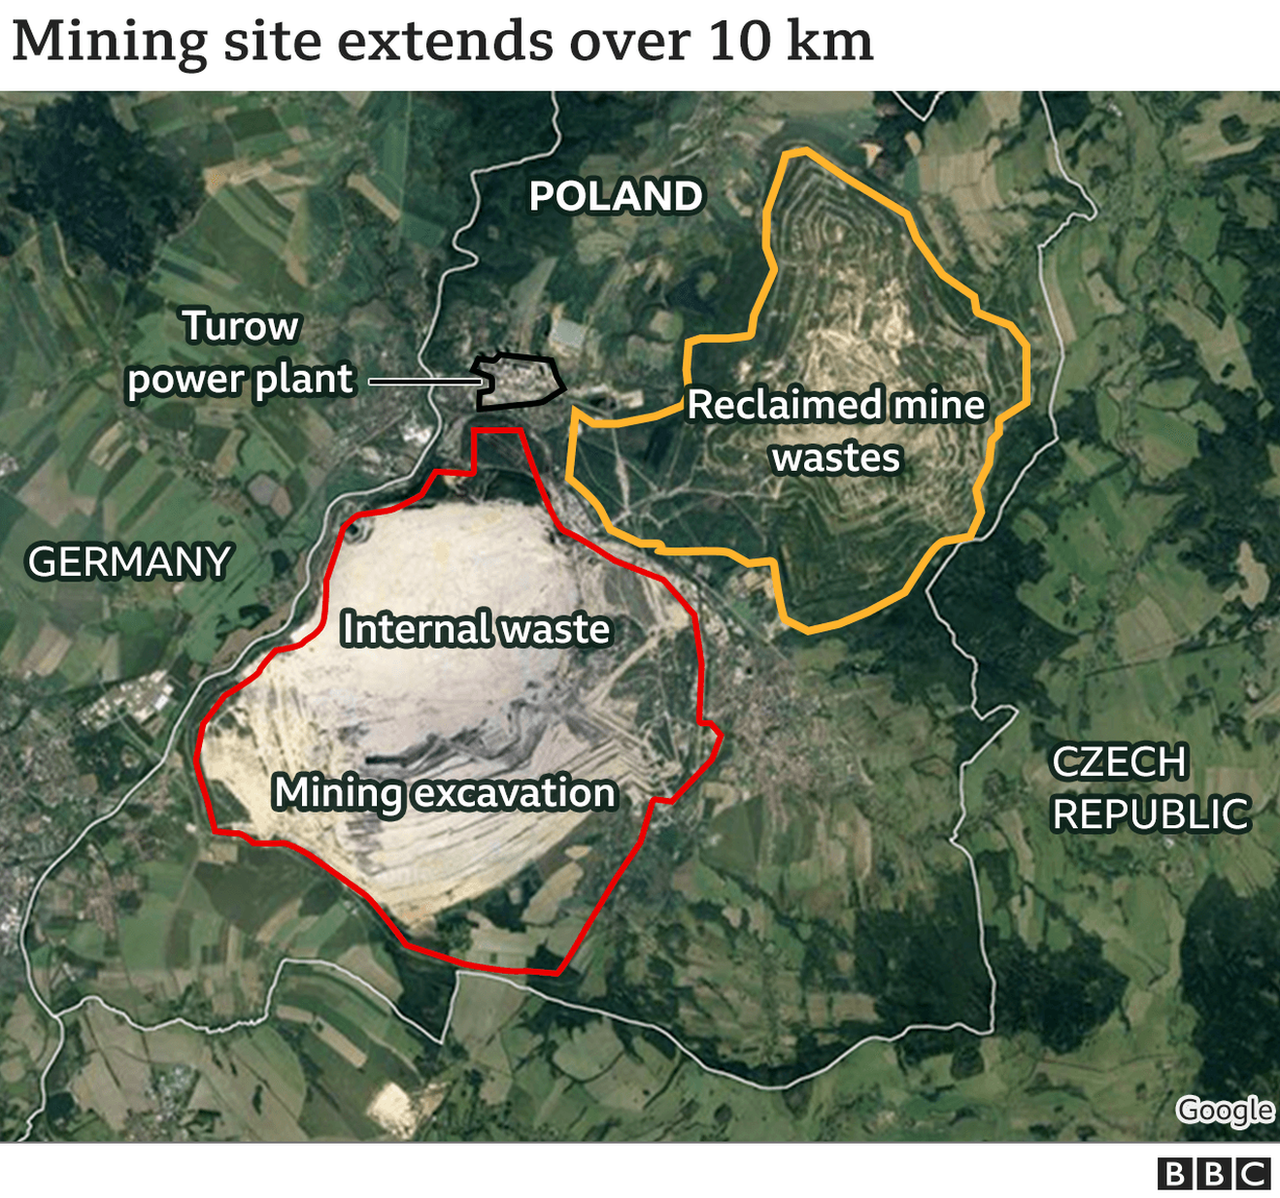 The Turow mine sites in Poland